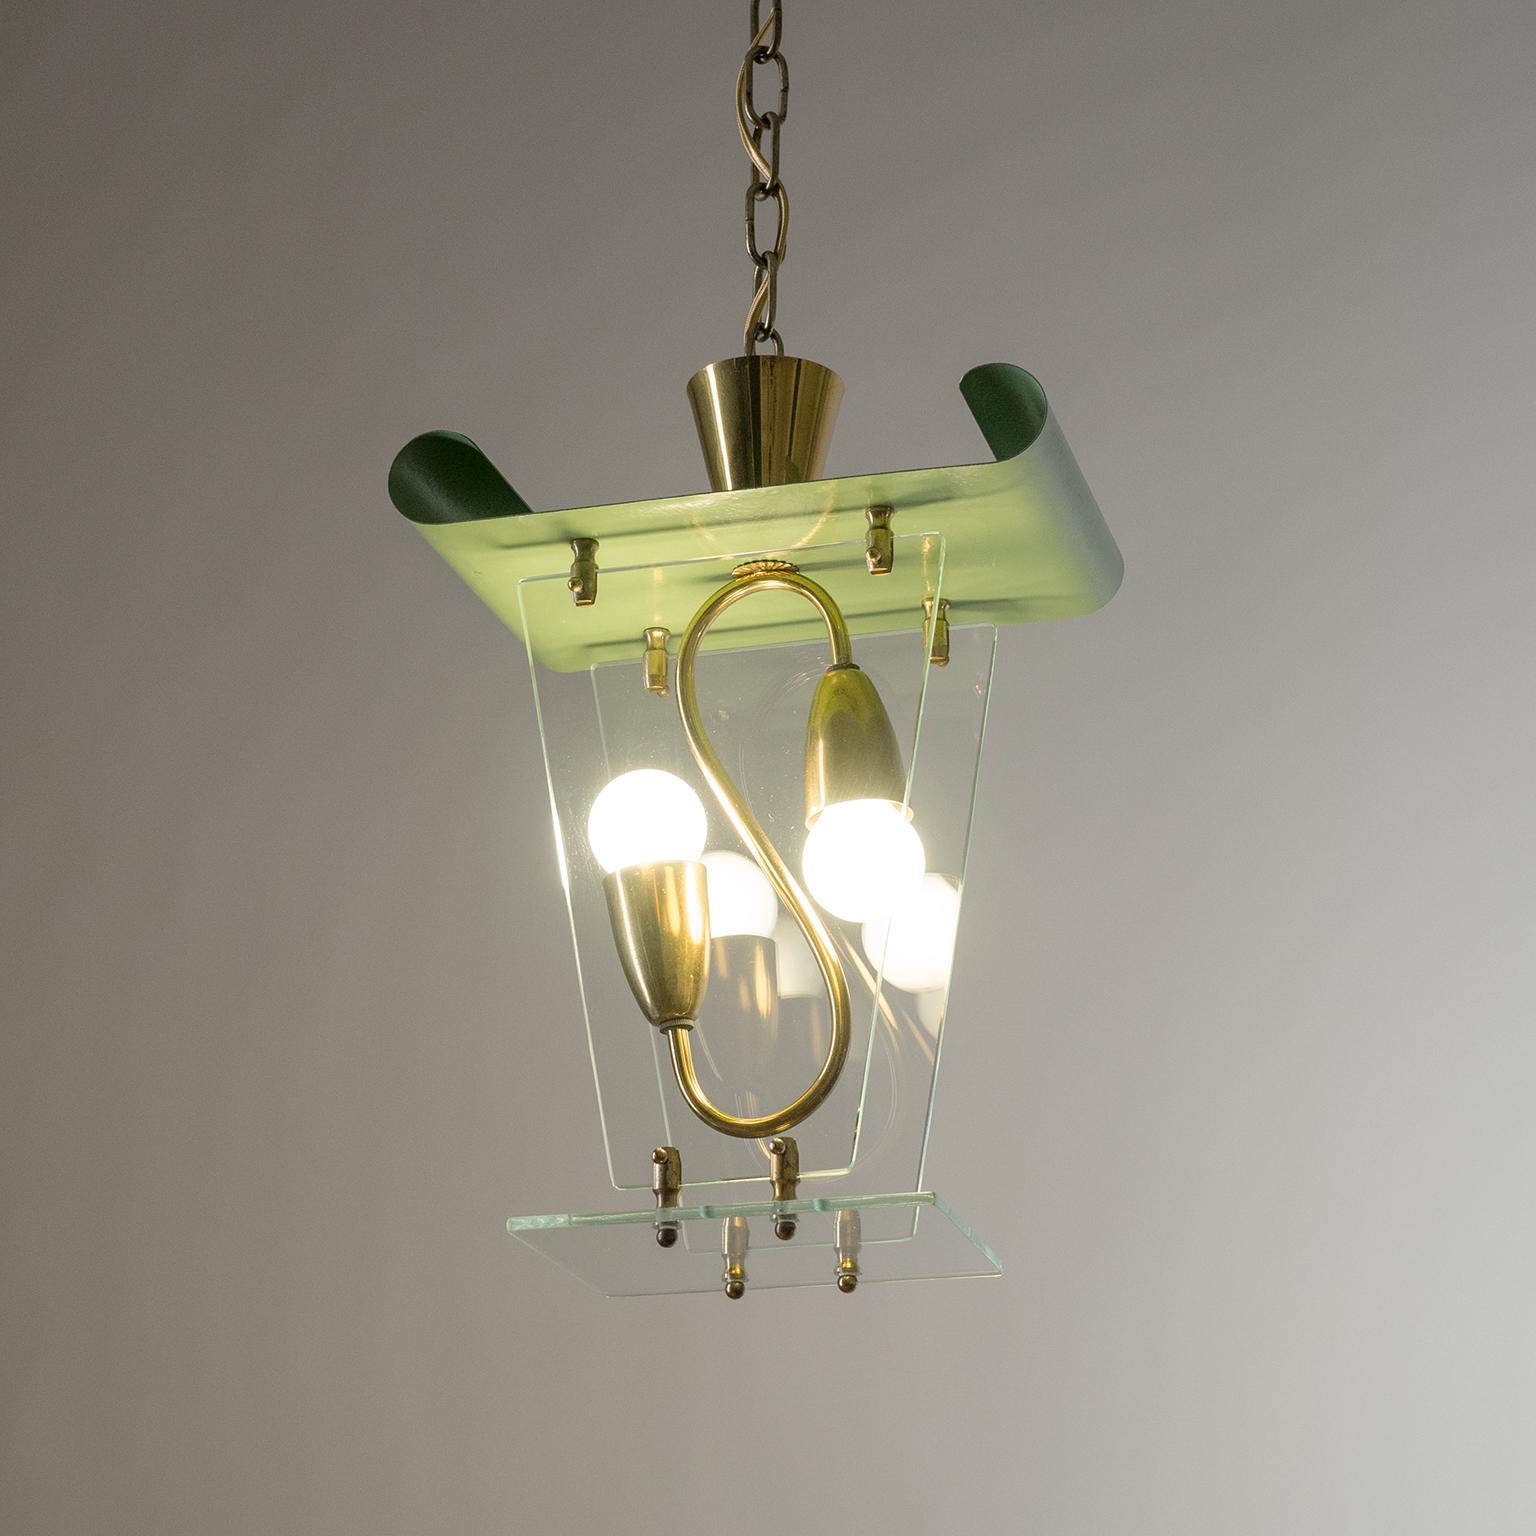 Art Deco Italian Lantern, 1940s, Brass and Glass